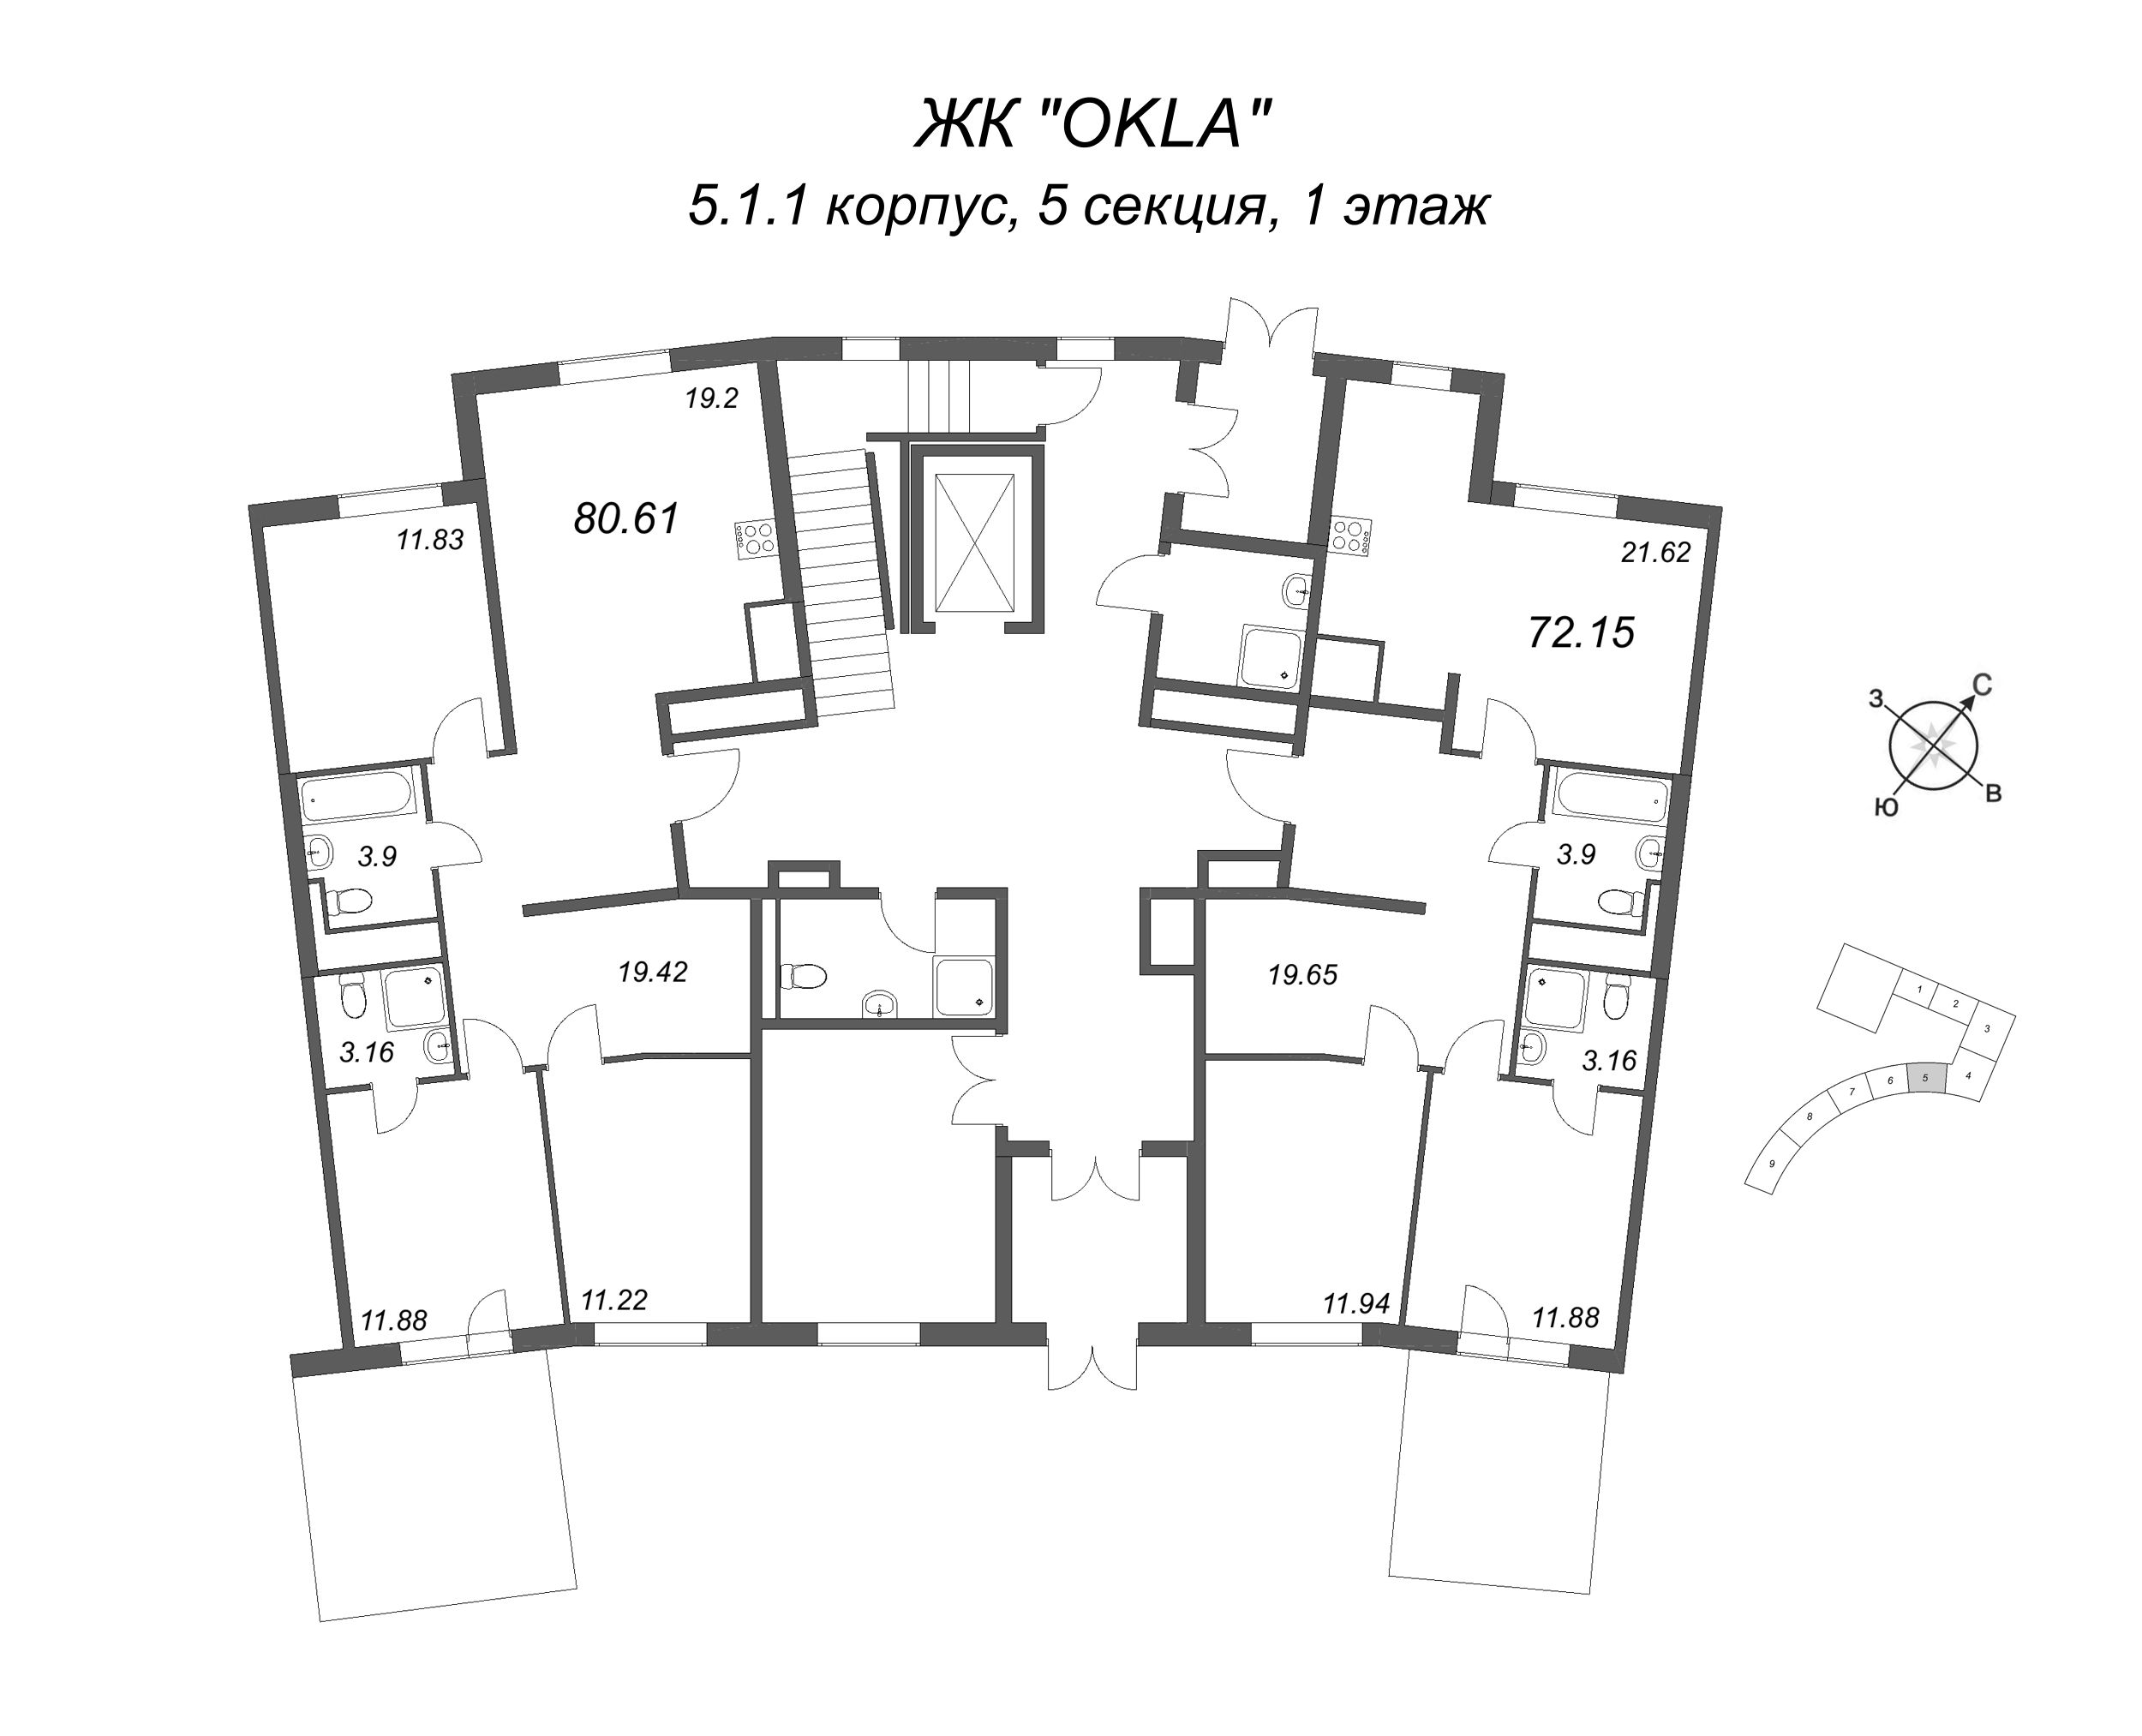 4-комнатная (Евро) квартира, 80.61 м² - планировка этажа